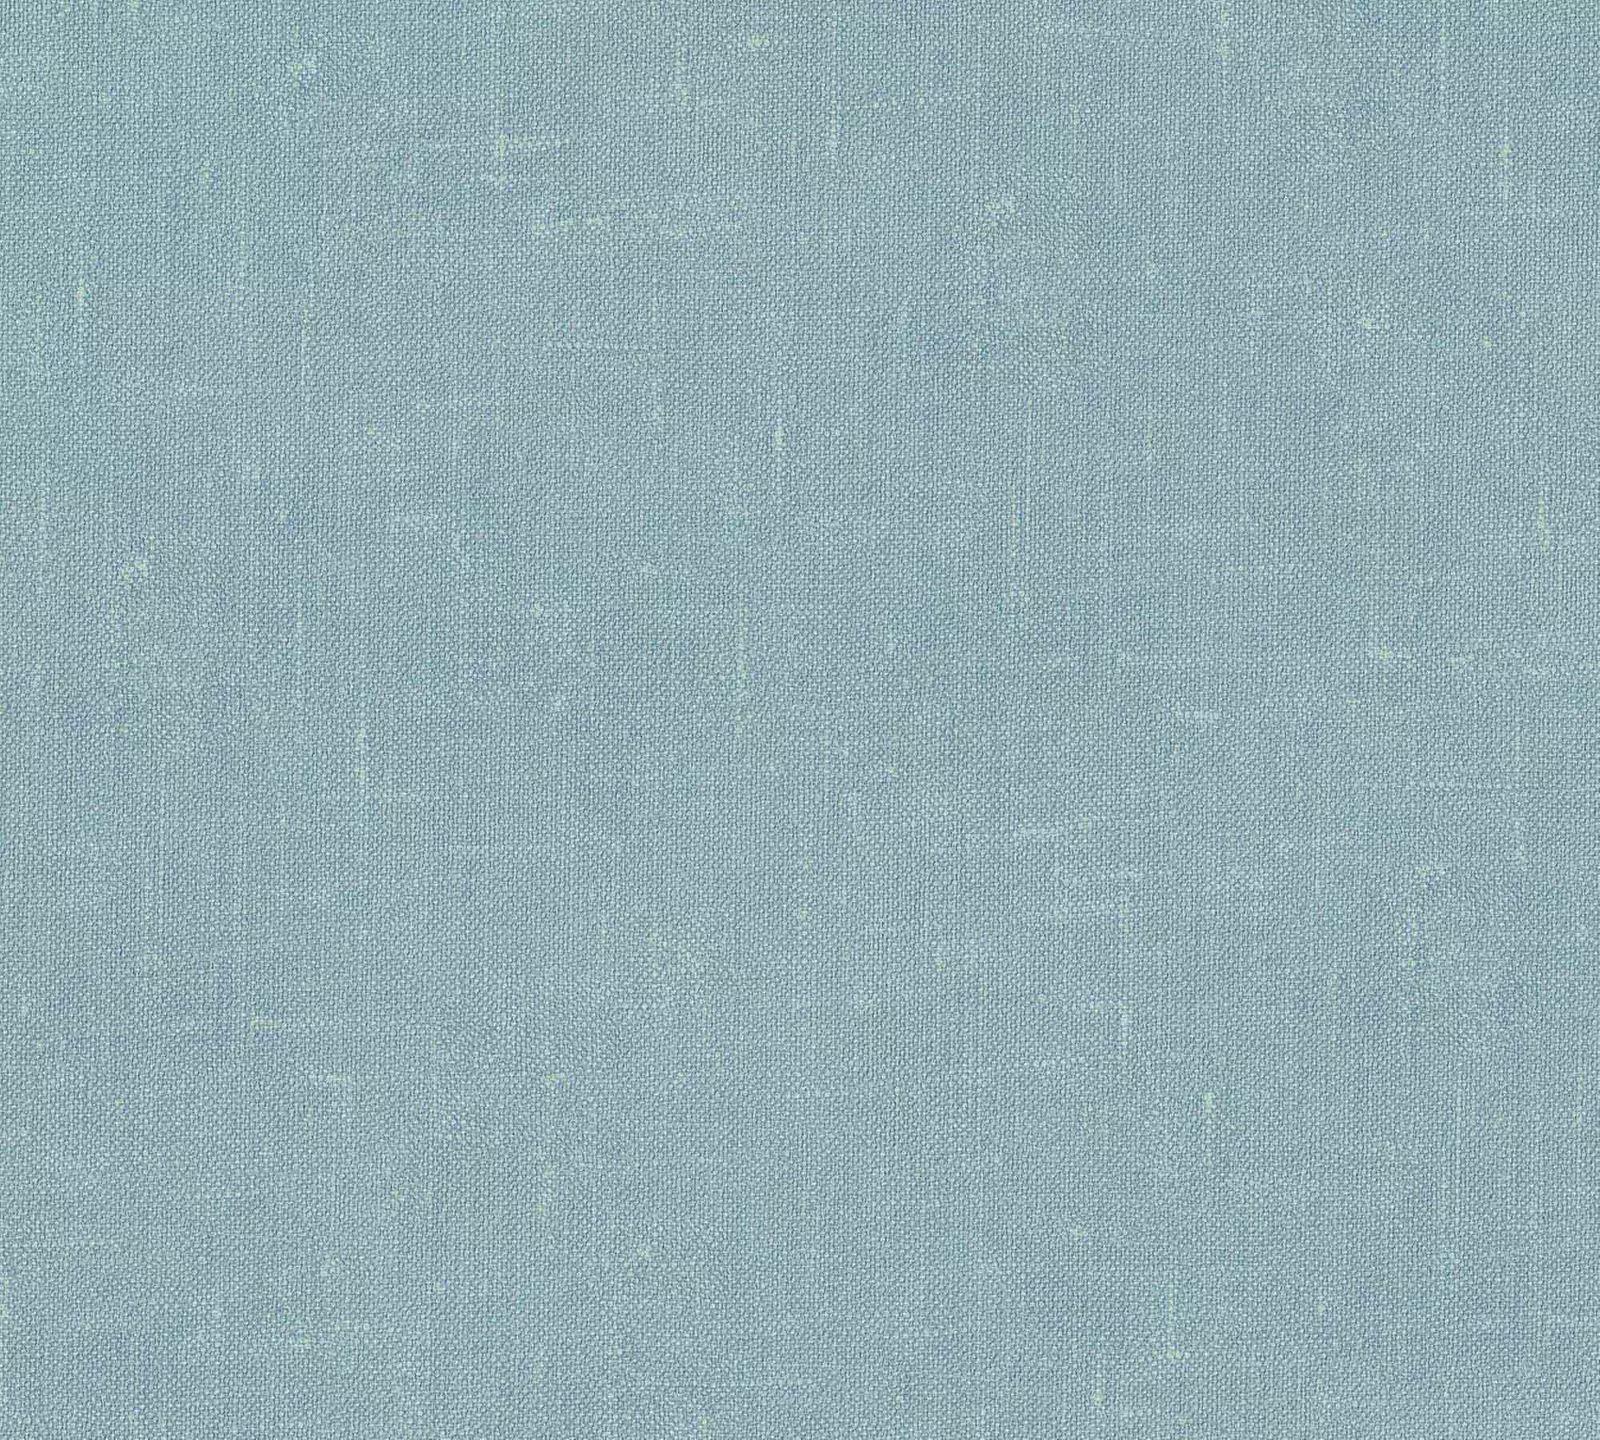 Kék textilhatású vlies-viny tapéta